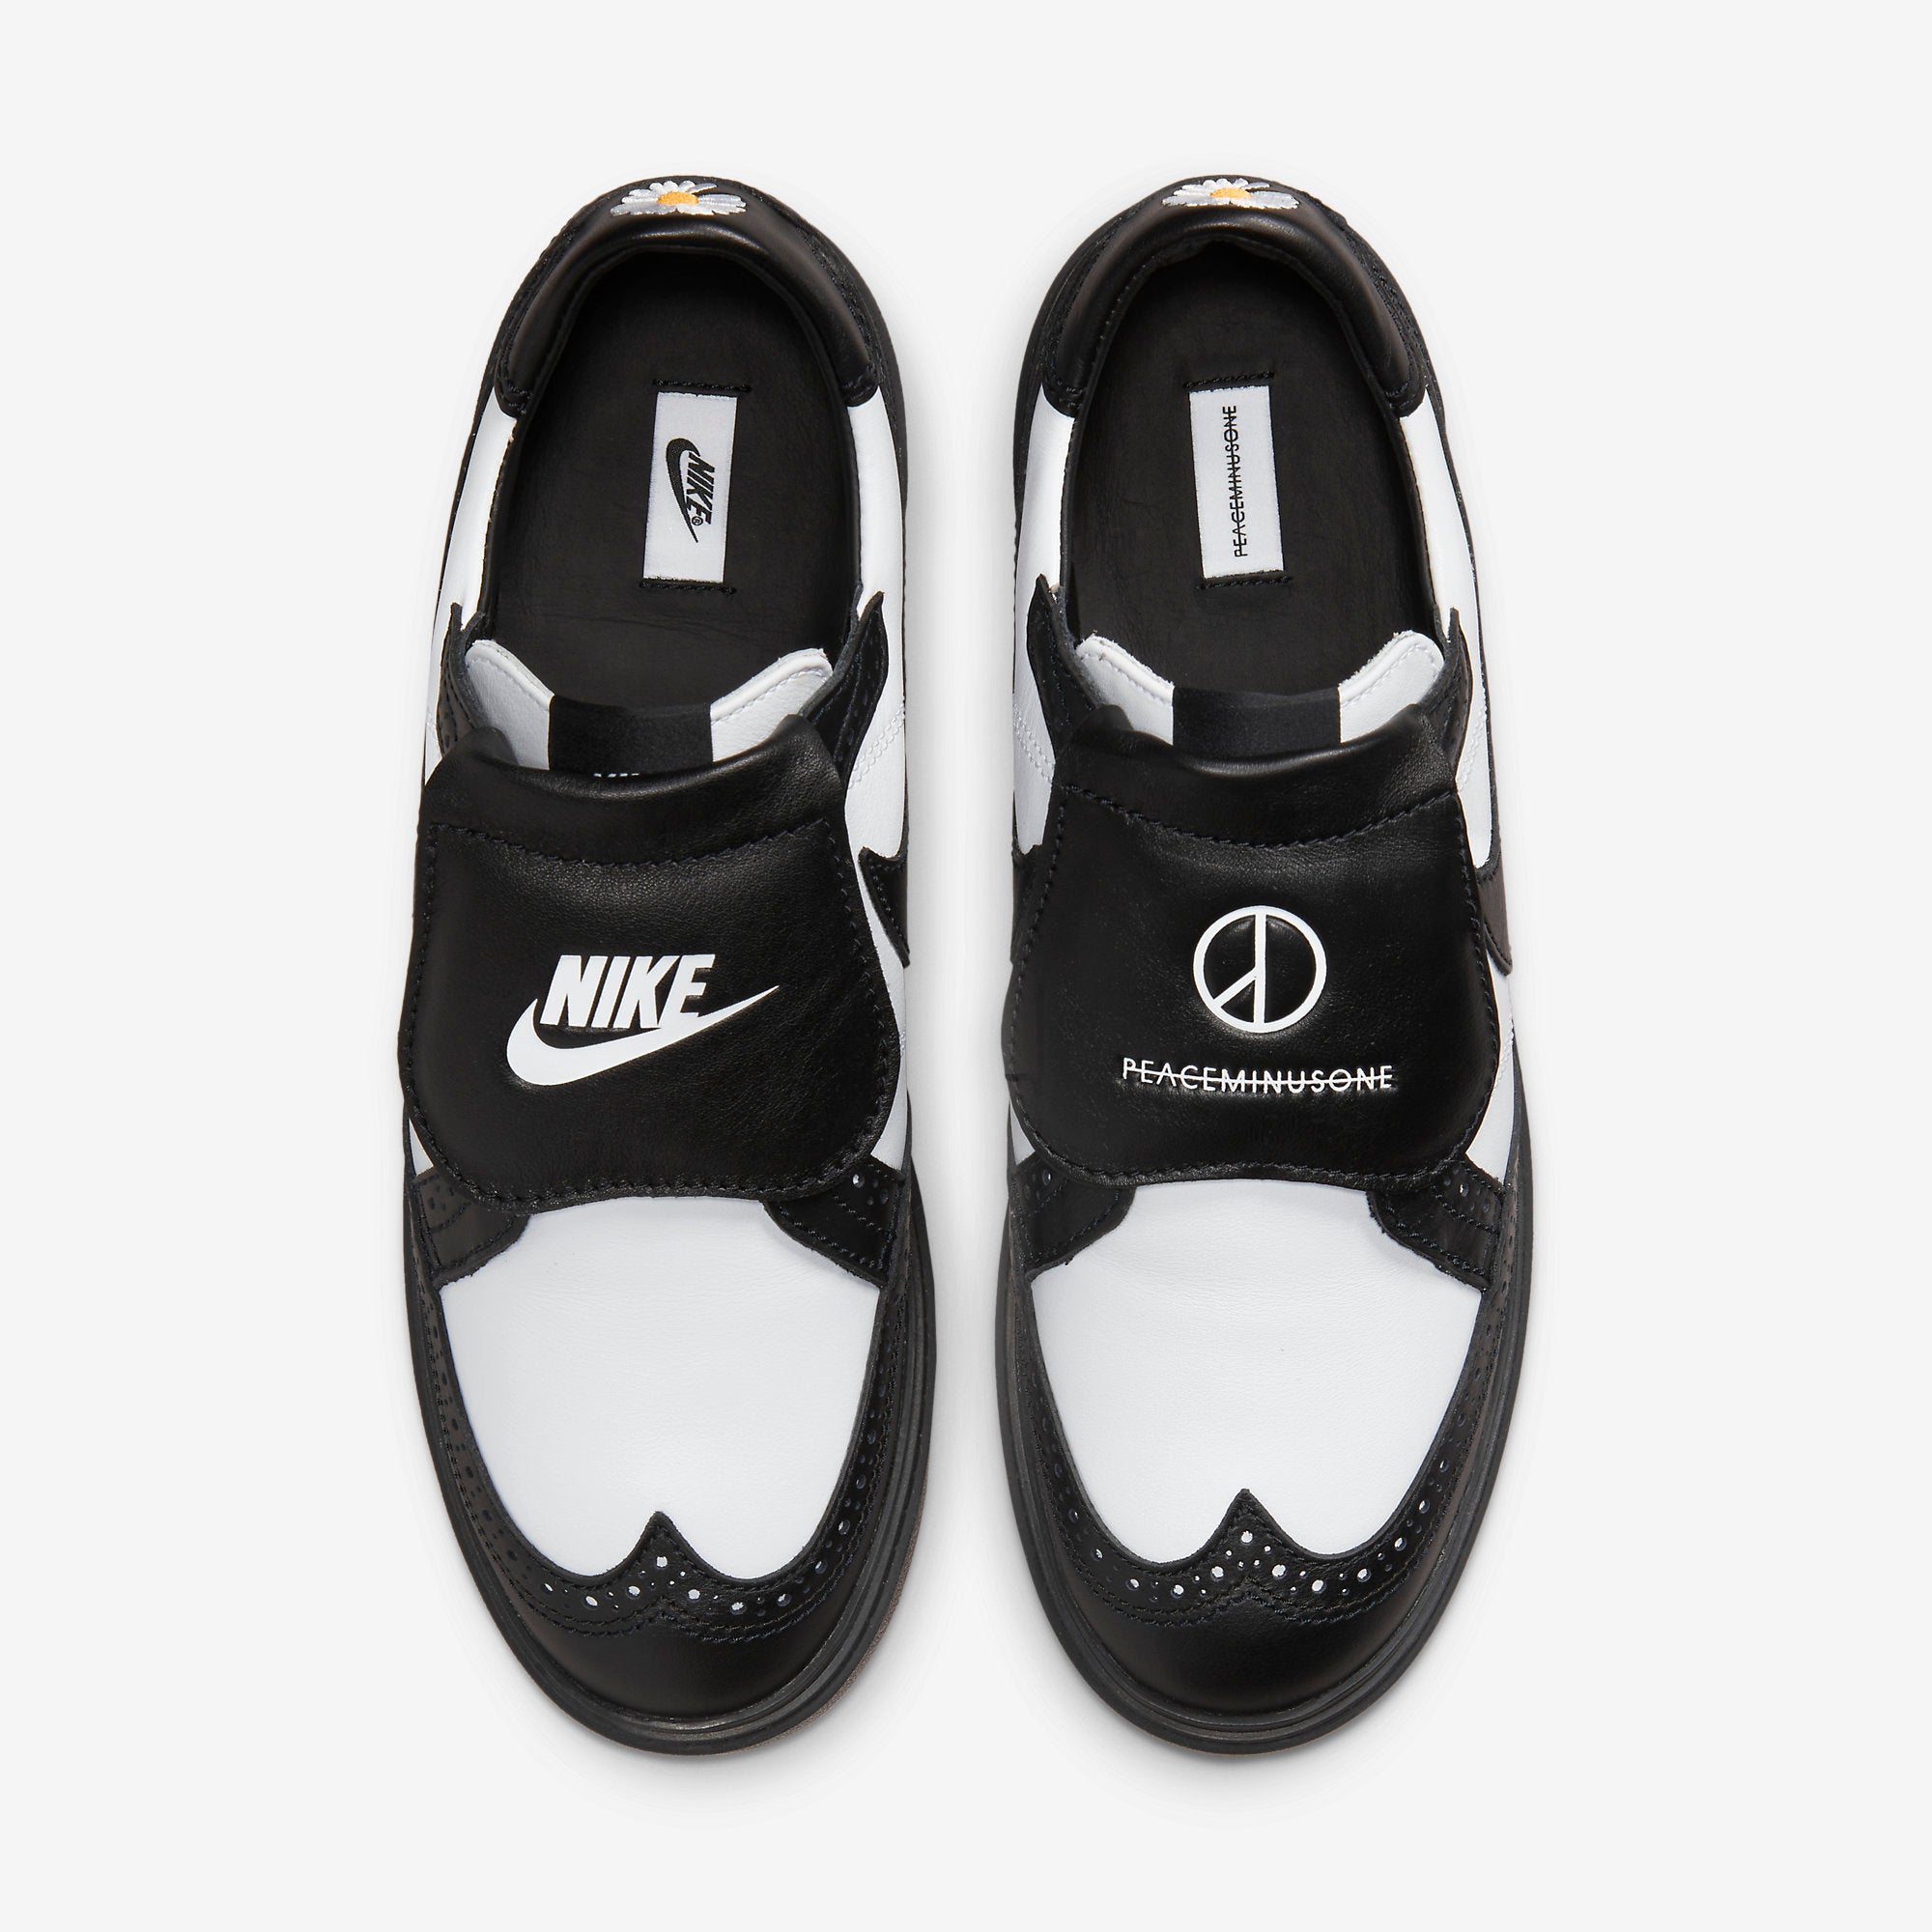 Nike x PEACEMINUSONE G-Dragon Kwondo 1 (Black/White)(DH2482-101)